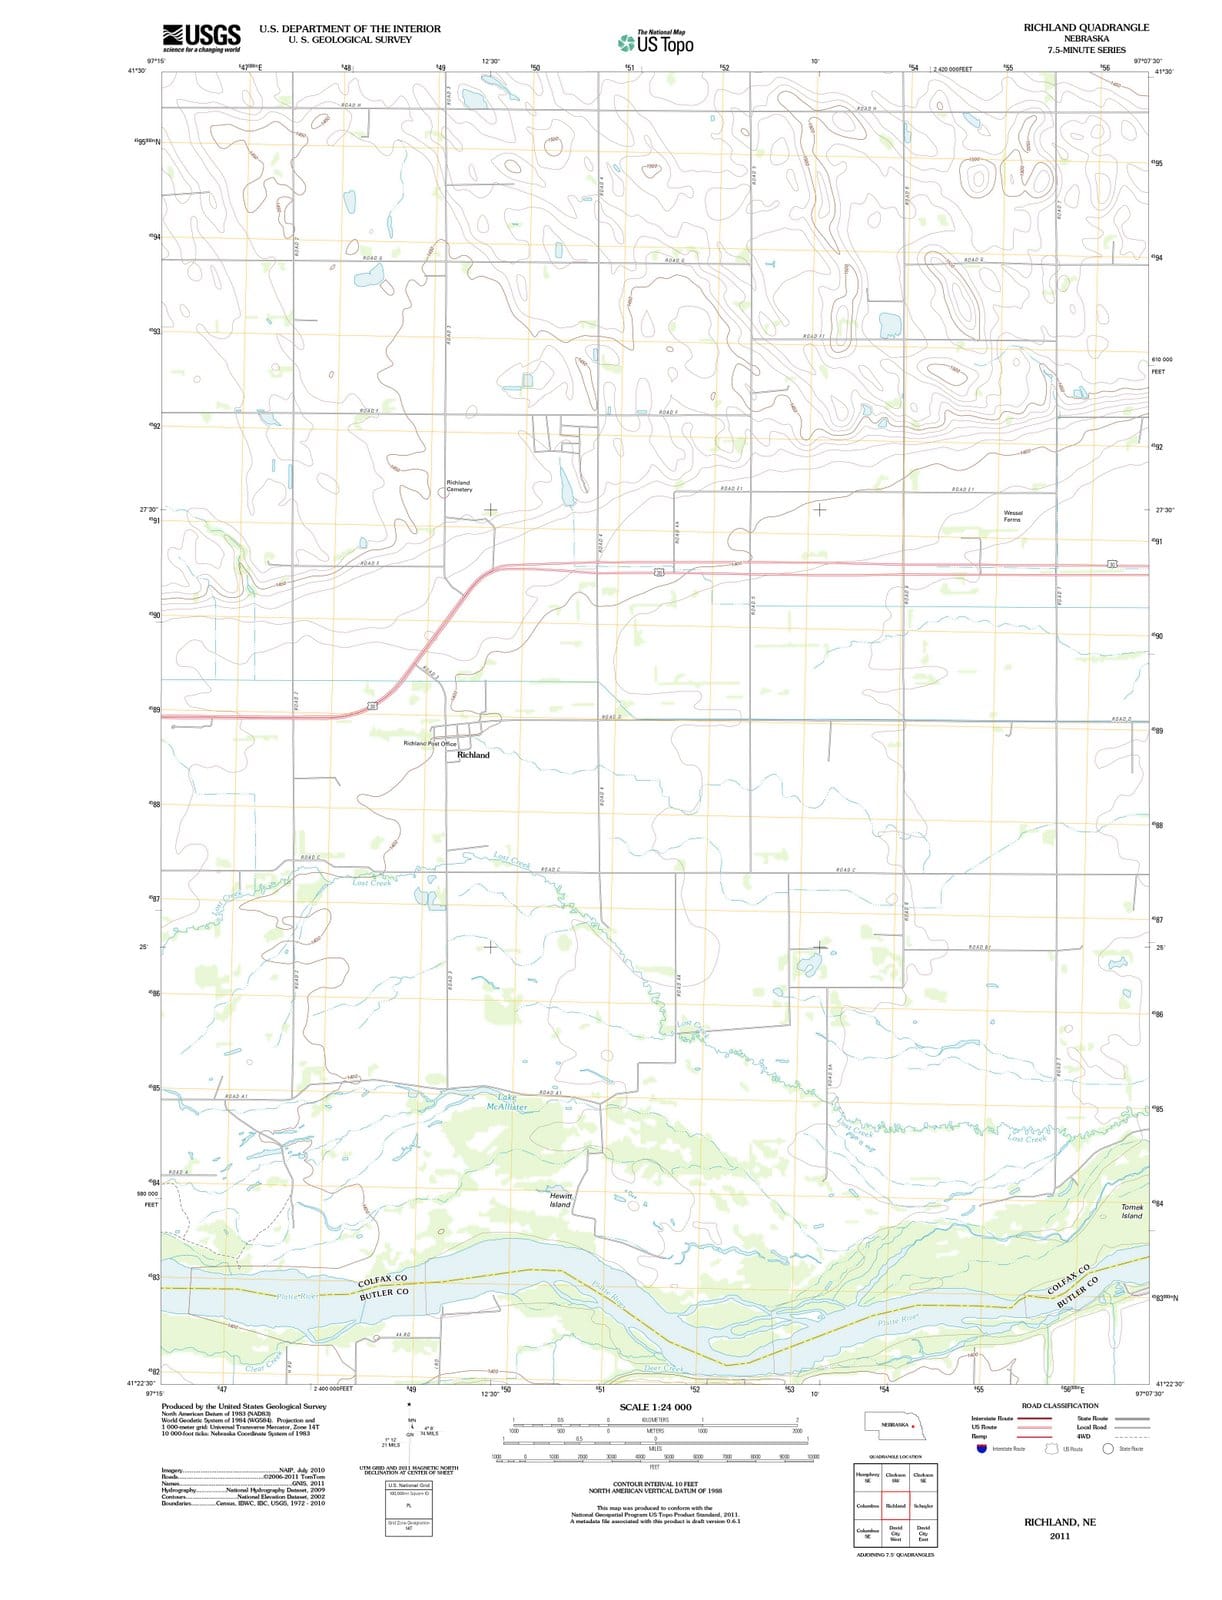 2011 Richland, NE - Nebraska - USGS Topographic Map